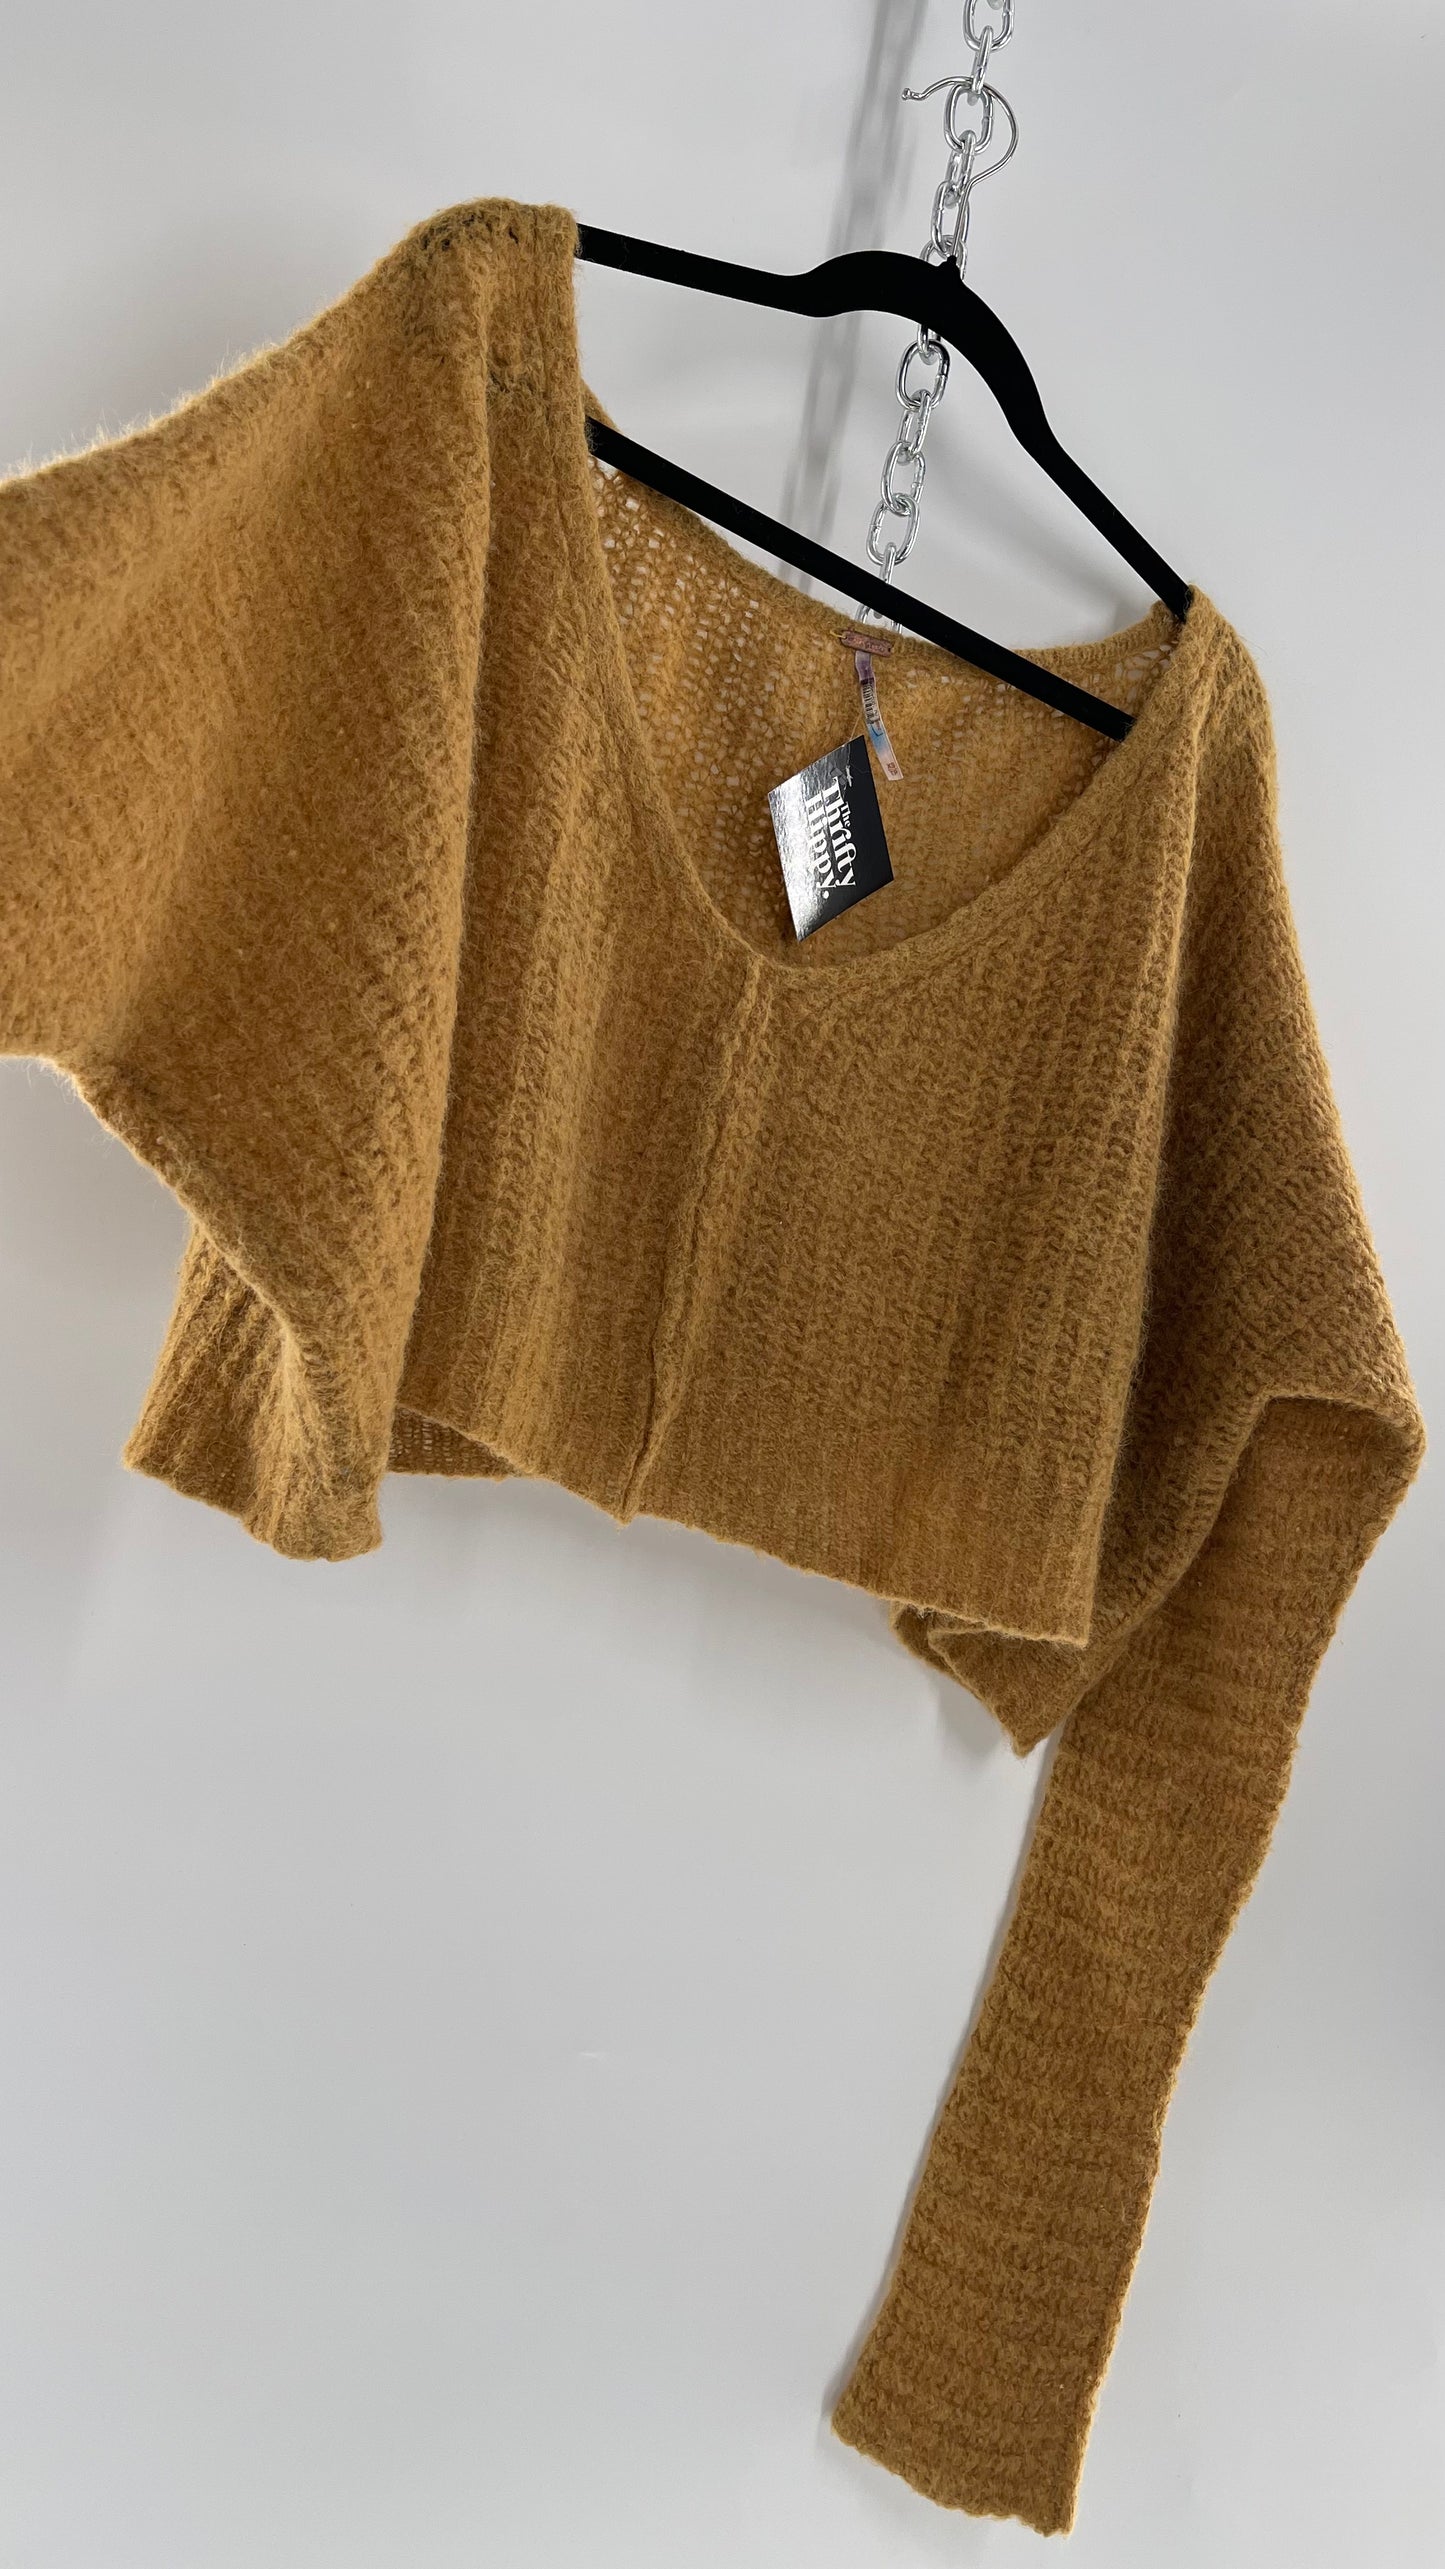 Free People Mustard Knit Cropped Sweater (XS) 88% Alpaca Fur